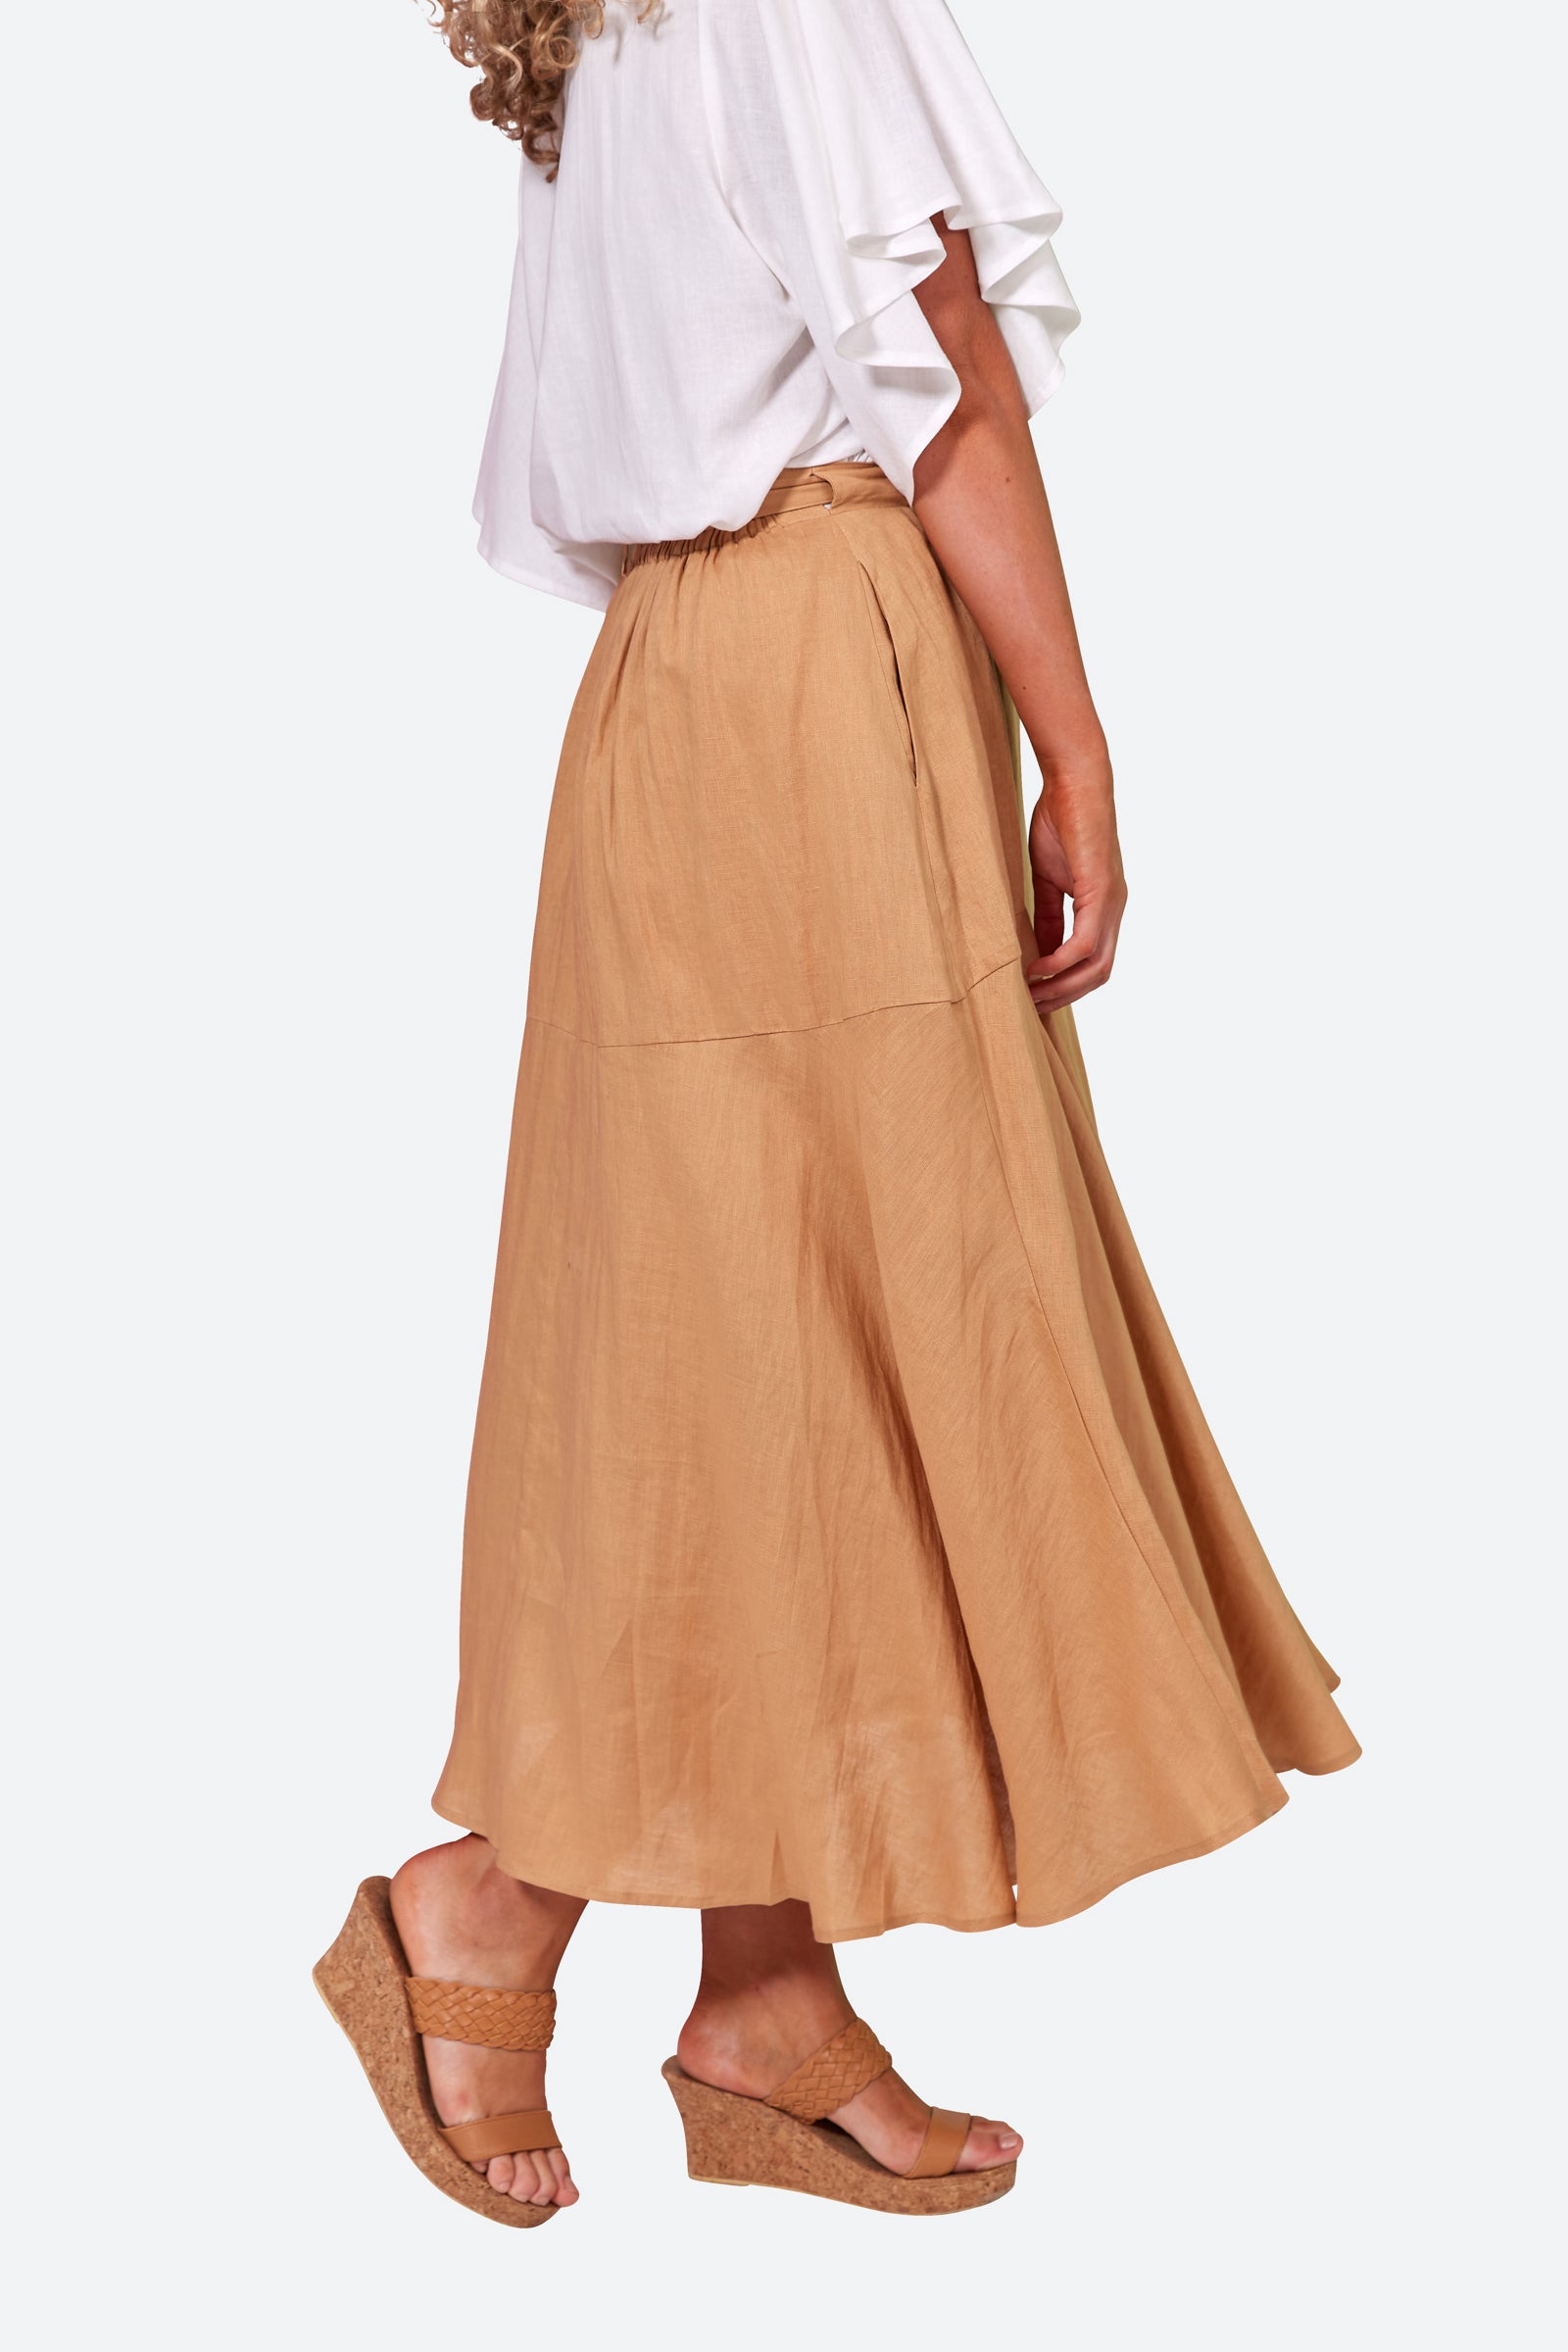 La Vie Wrap Skirt - Caramel - eb&ive Clothing - Skirt Mid Linen